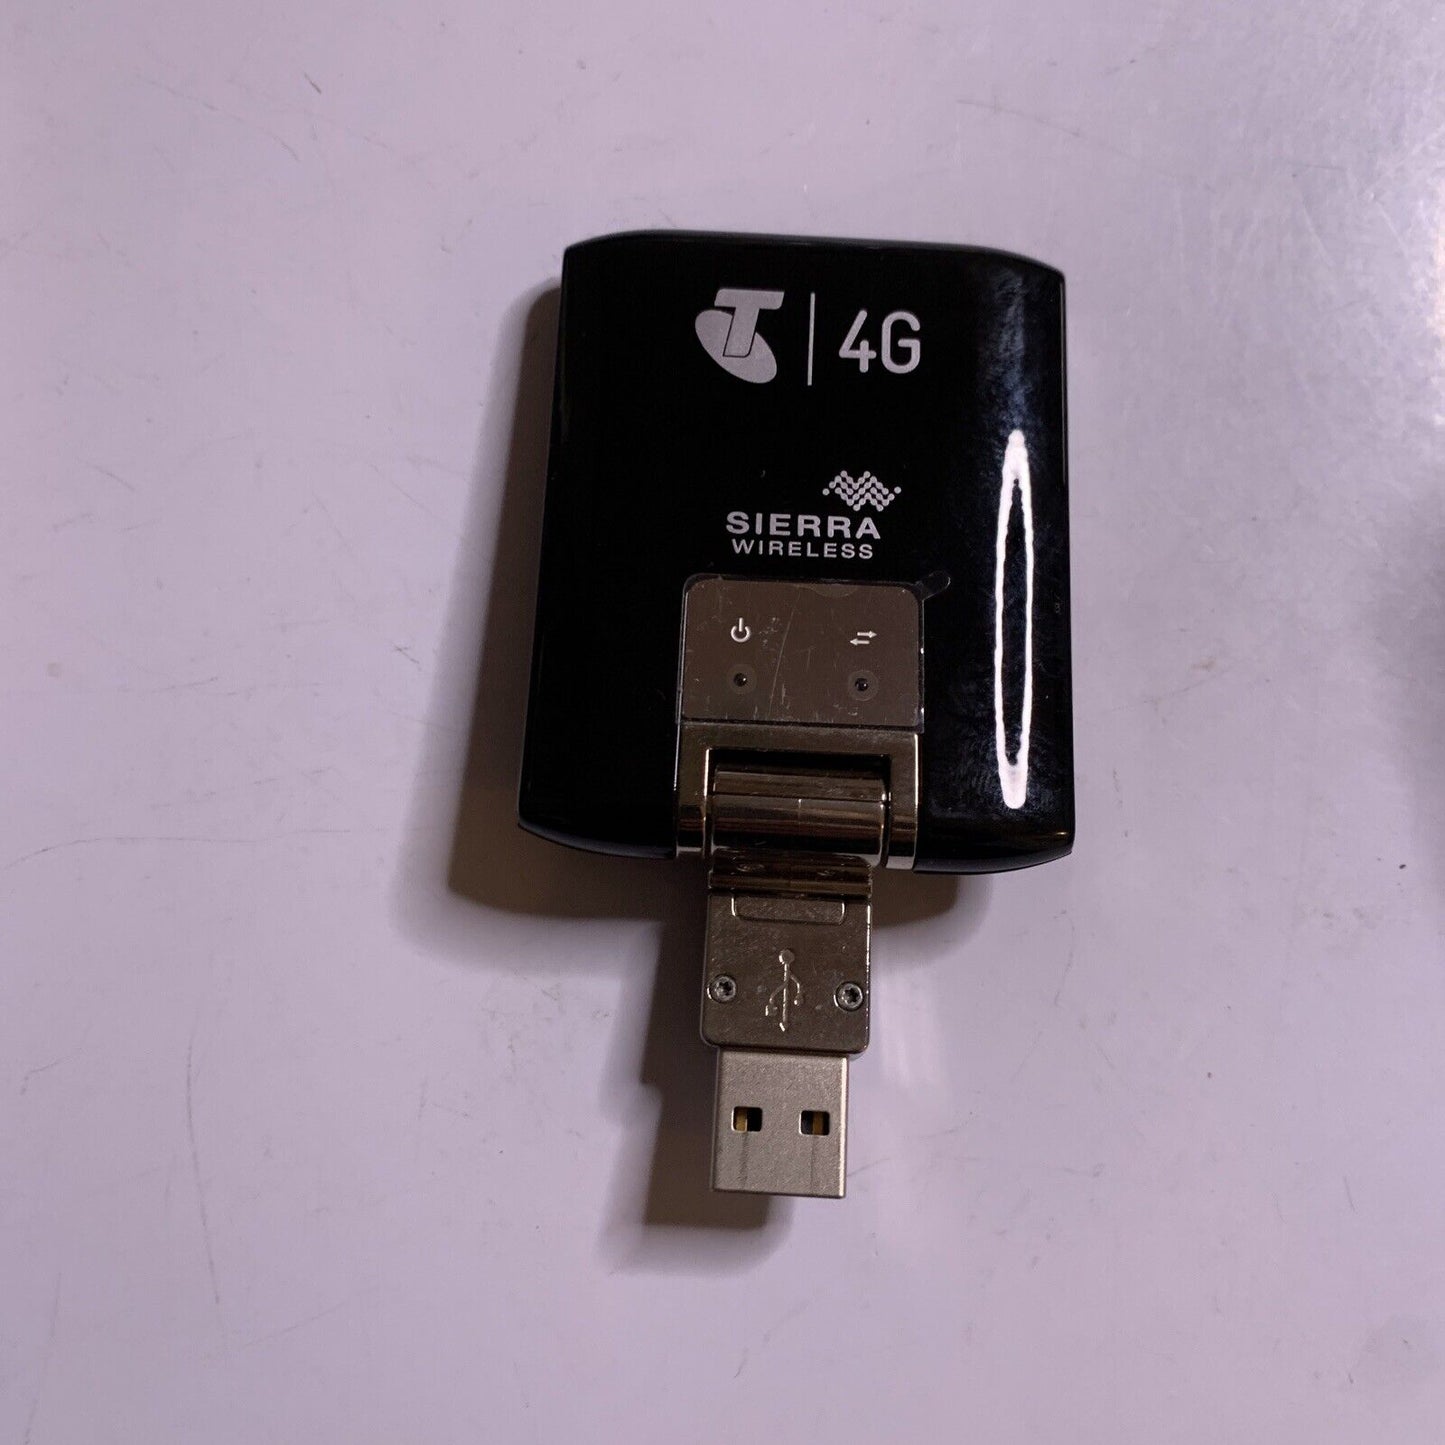 Telstra Sierra / Netgear Aircard 320U USB 4G Modem